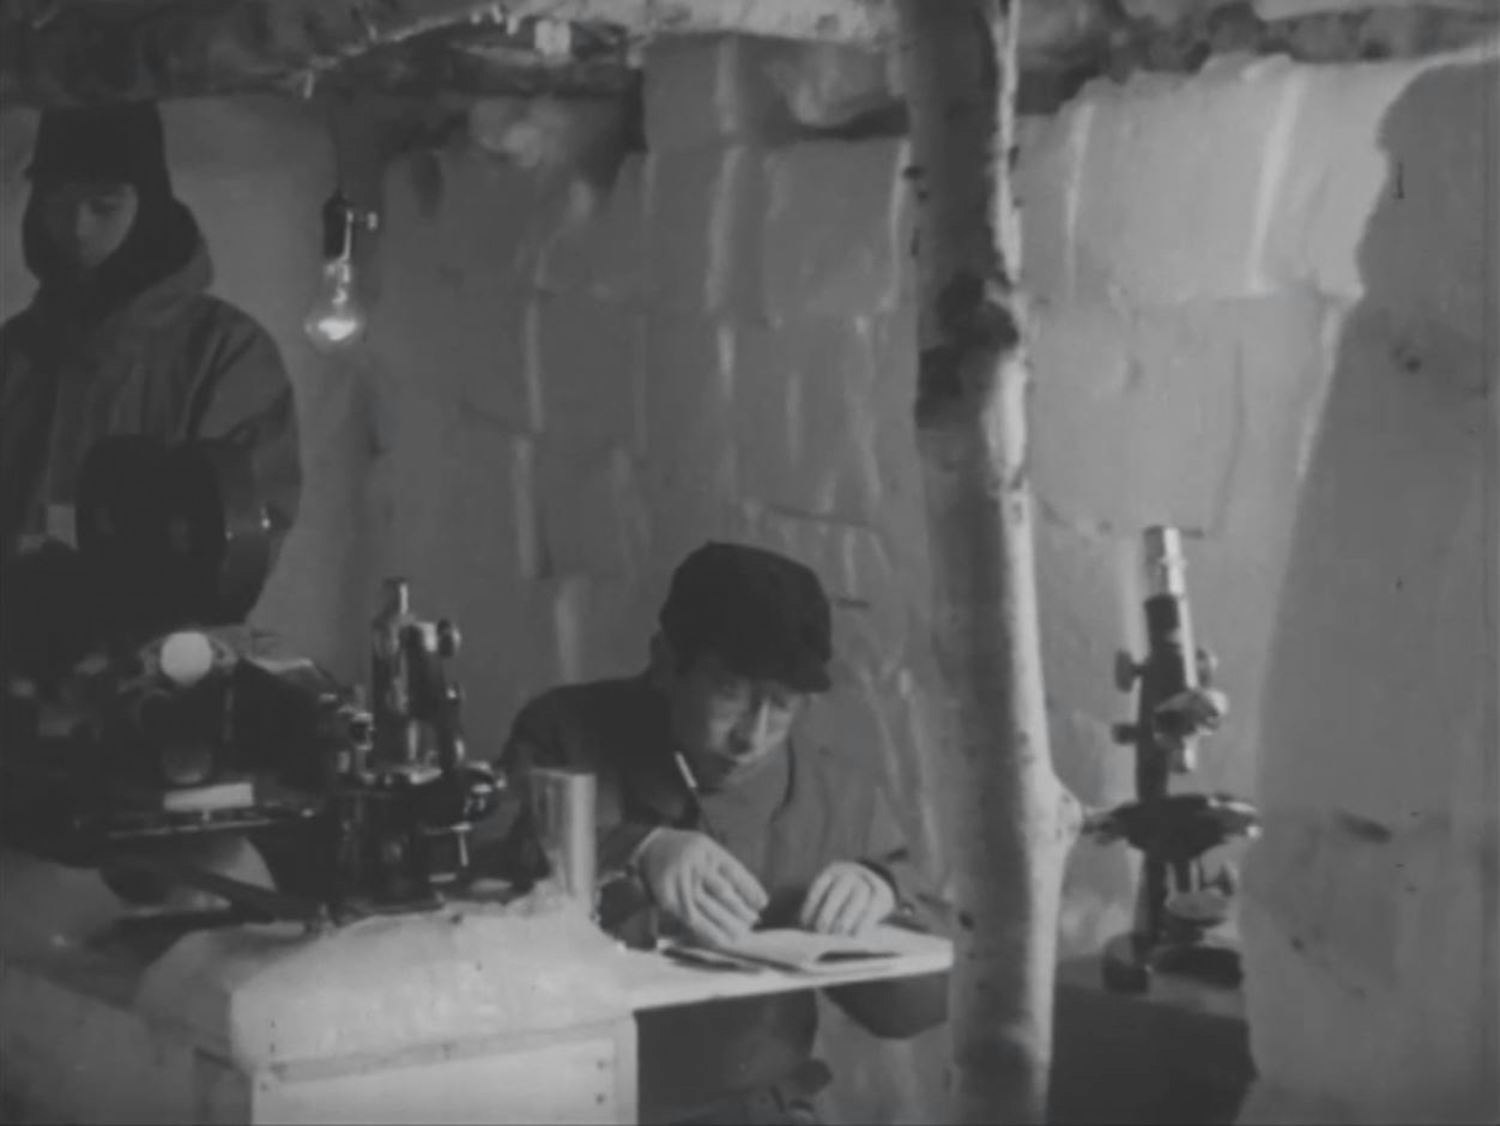 Film still from Snow Crystals (1958) 14min, Iwanami, Tanoshii Kagaku series. Produced by Shigeharu Yoshino, directed by Chonosuke Ise